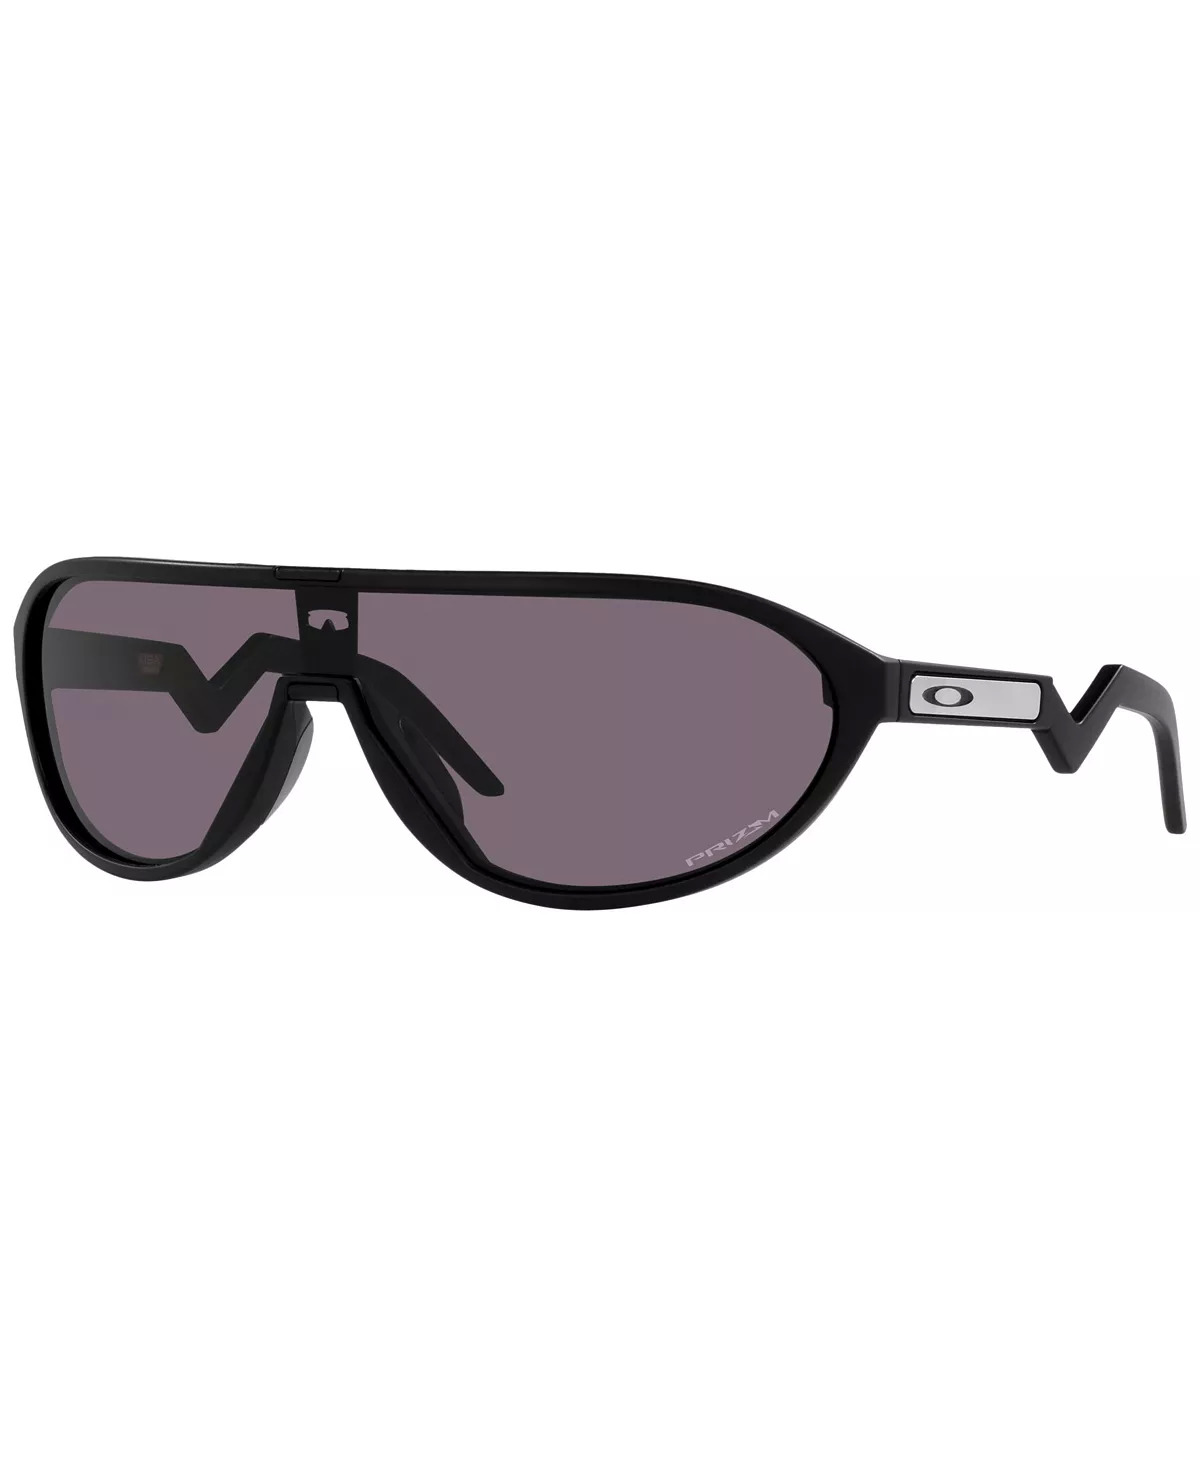 Oakley Men's & Women's Sunglasses: CMDN (Various Colors) $62.80, Leadline (Polished Black) $89.20, NFL Low Key (Various Teams) $77.20, More + Free Shipping